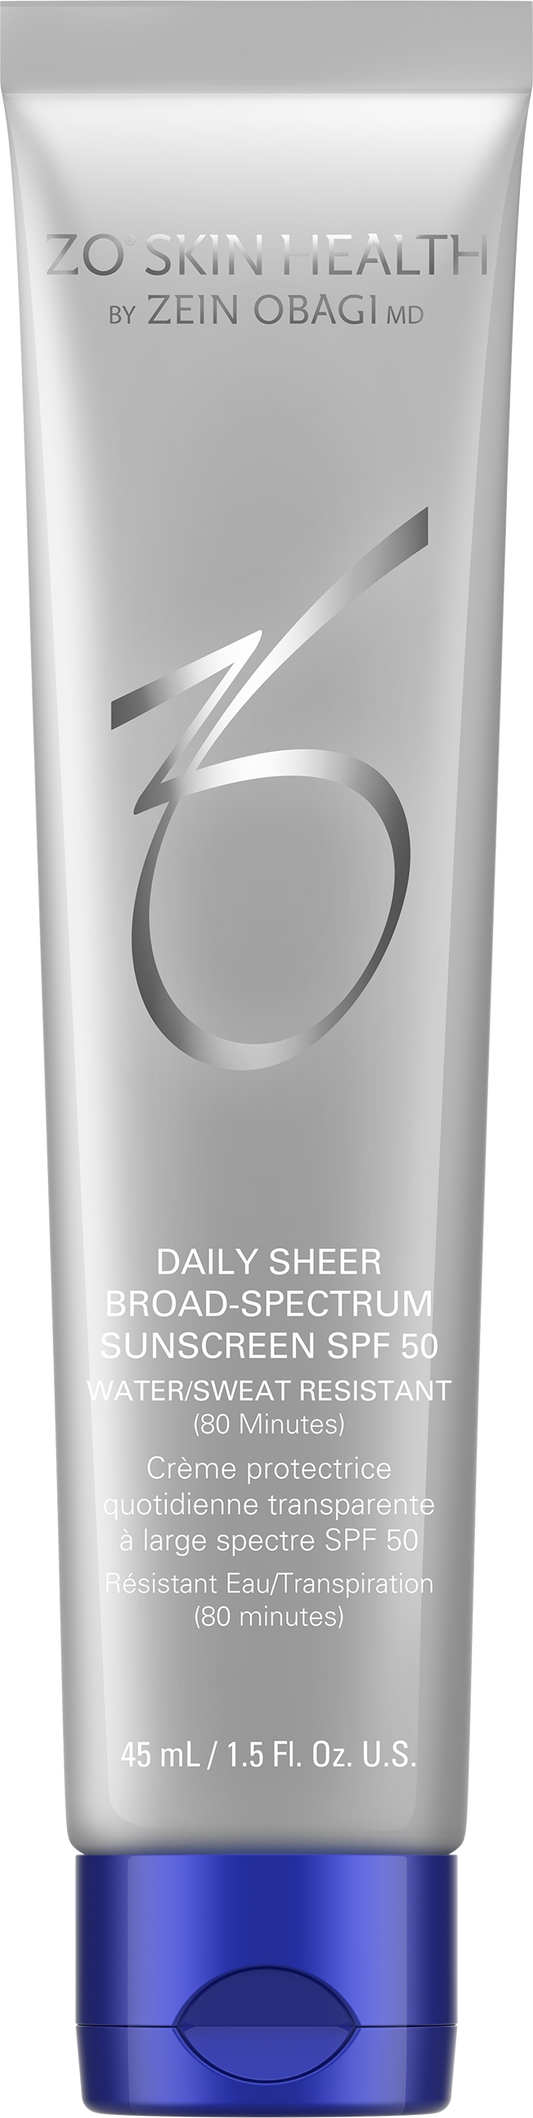 Daily Sheer Broad-Spectrum SPF 50